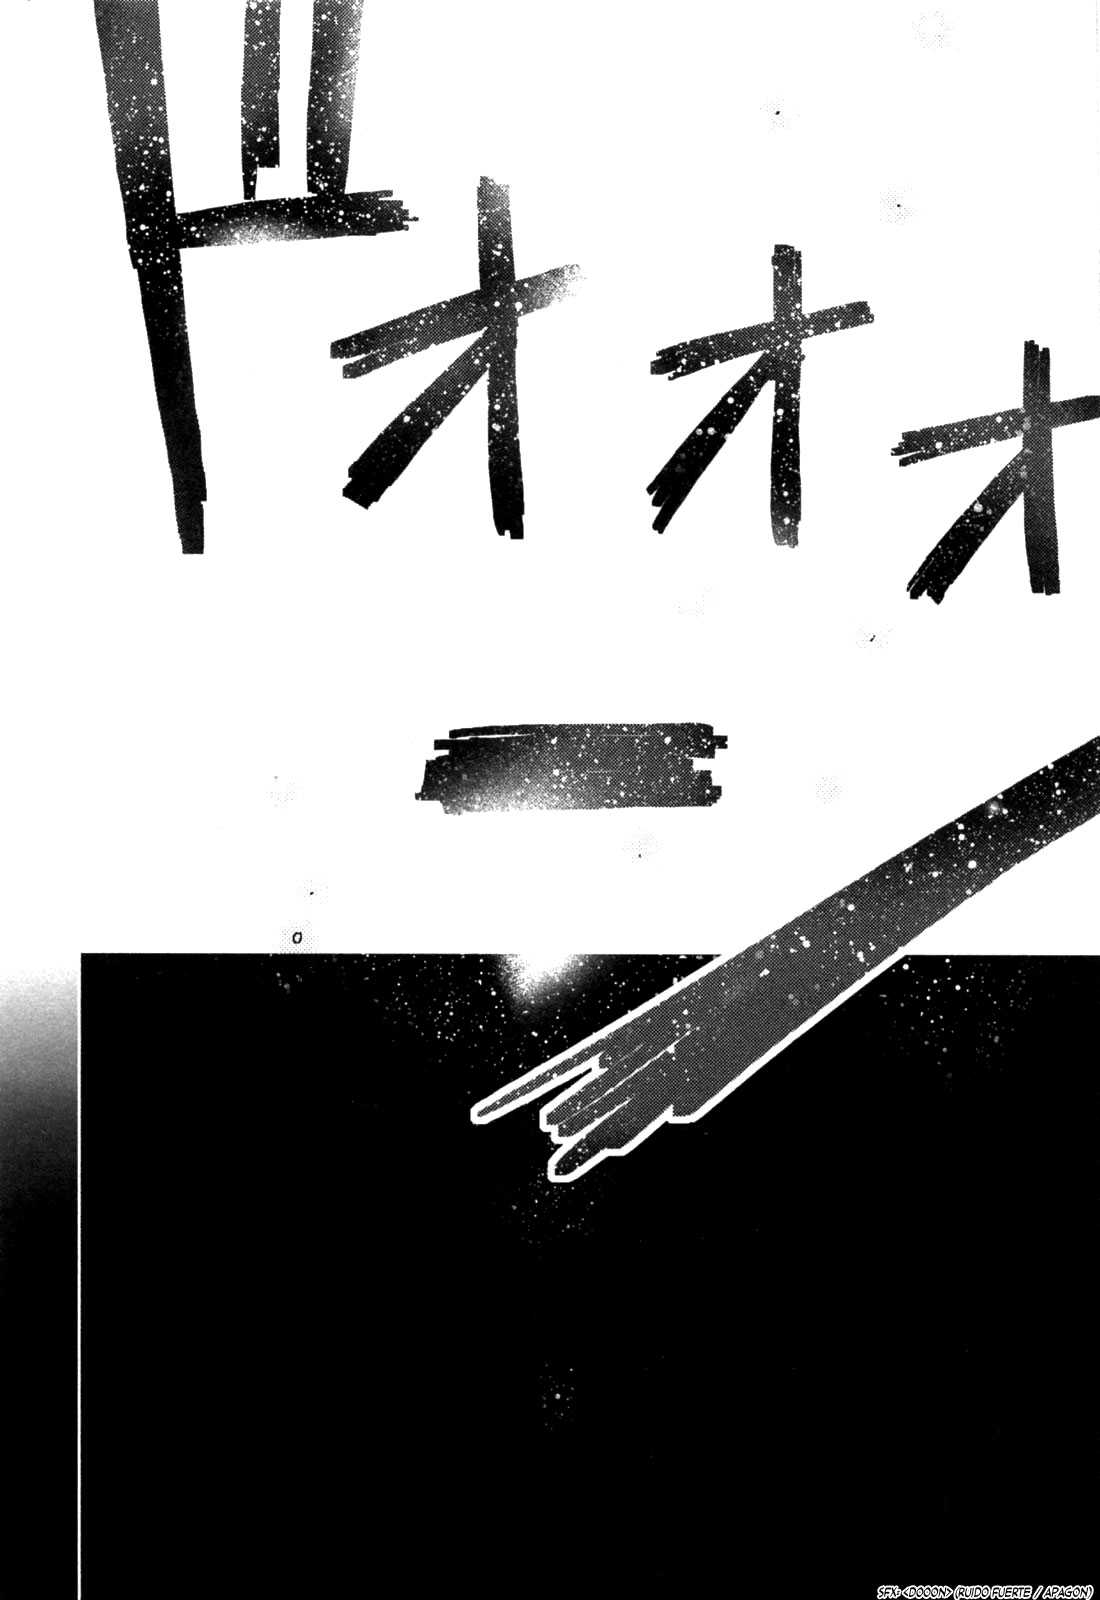 [Tanaka Yutaka] Itoshi no Kana | My Lovely Ghost Kana Vol.2 [Spanish/Espa&ntilde;ol] [田中ユタカ] 愛しのかな 第2巻 [スペイン翻訳]